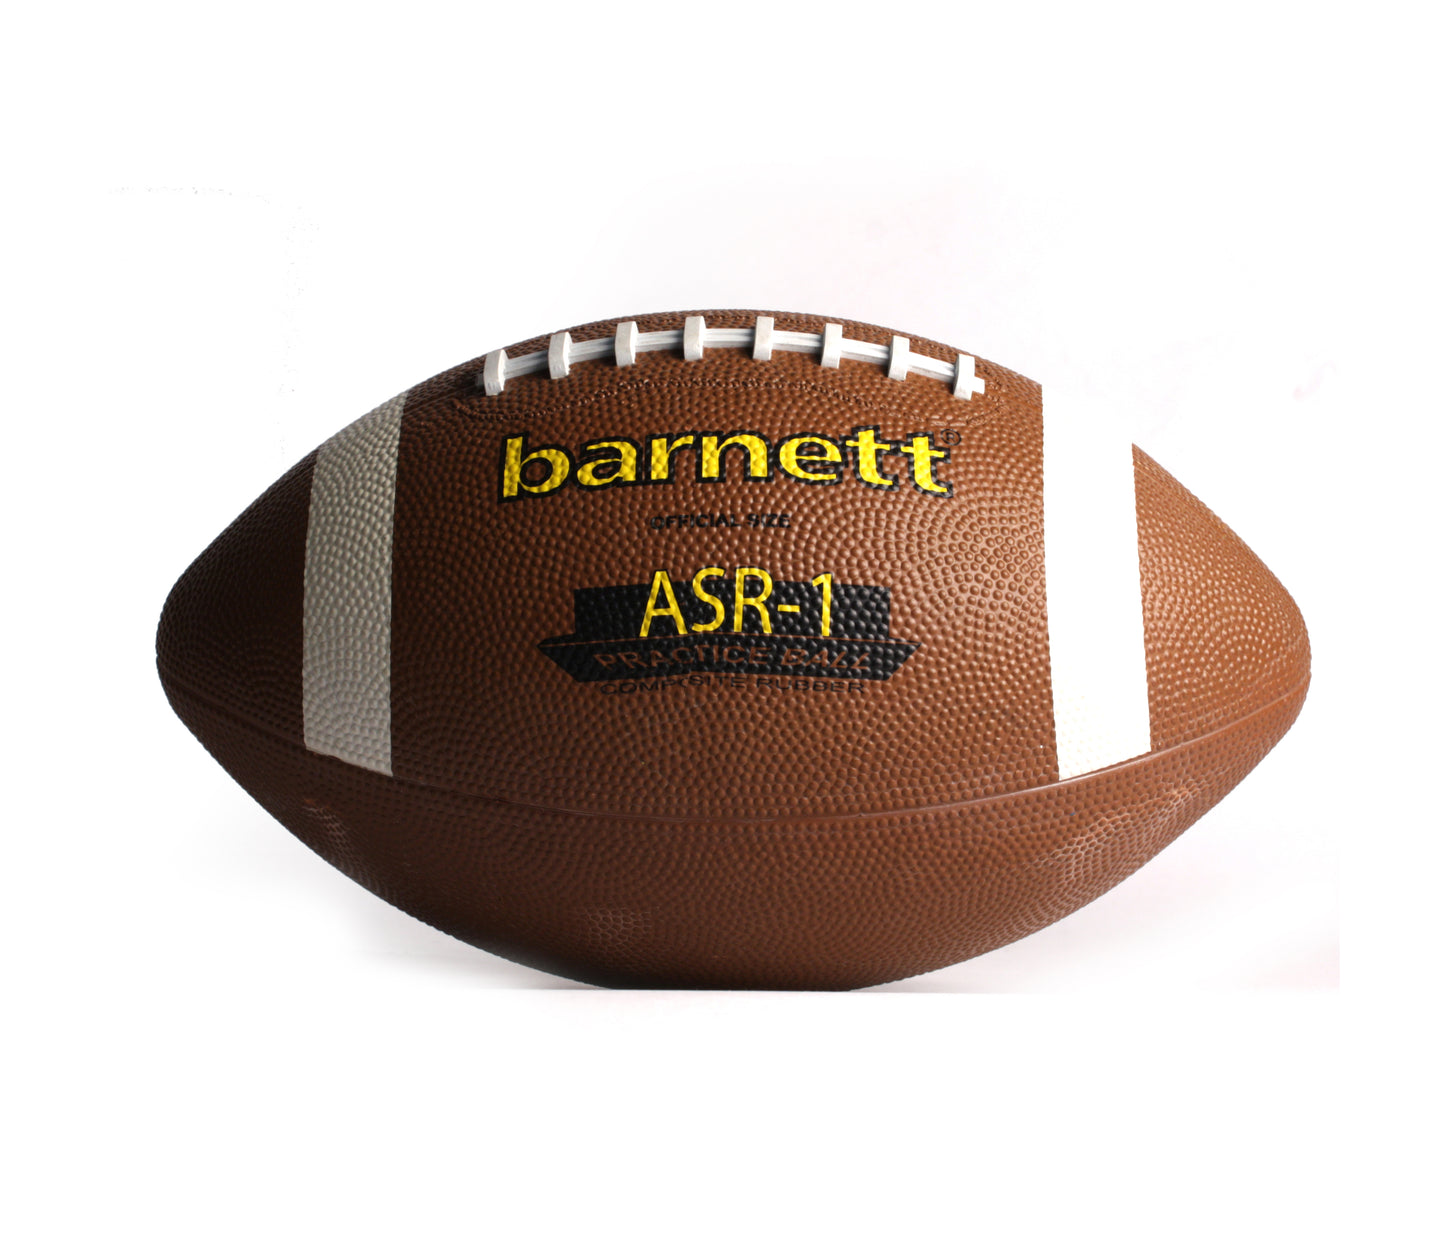 ASR-1 Football, Practice Senior